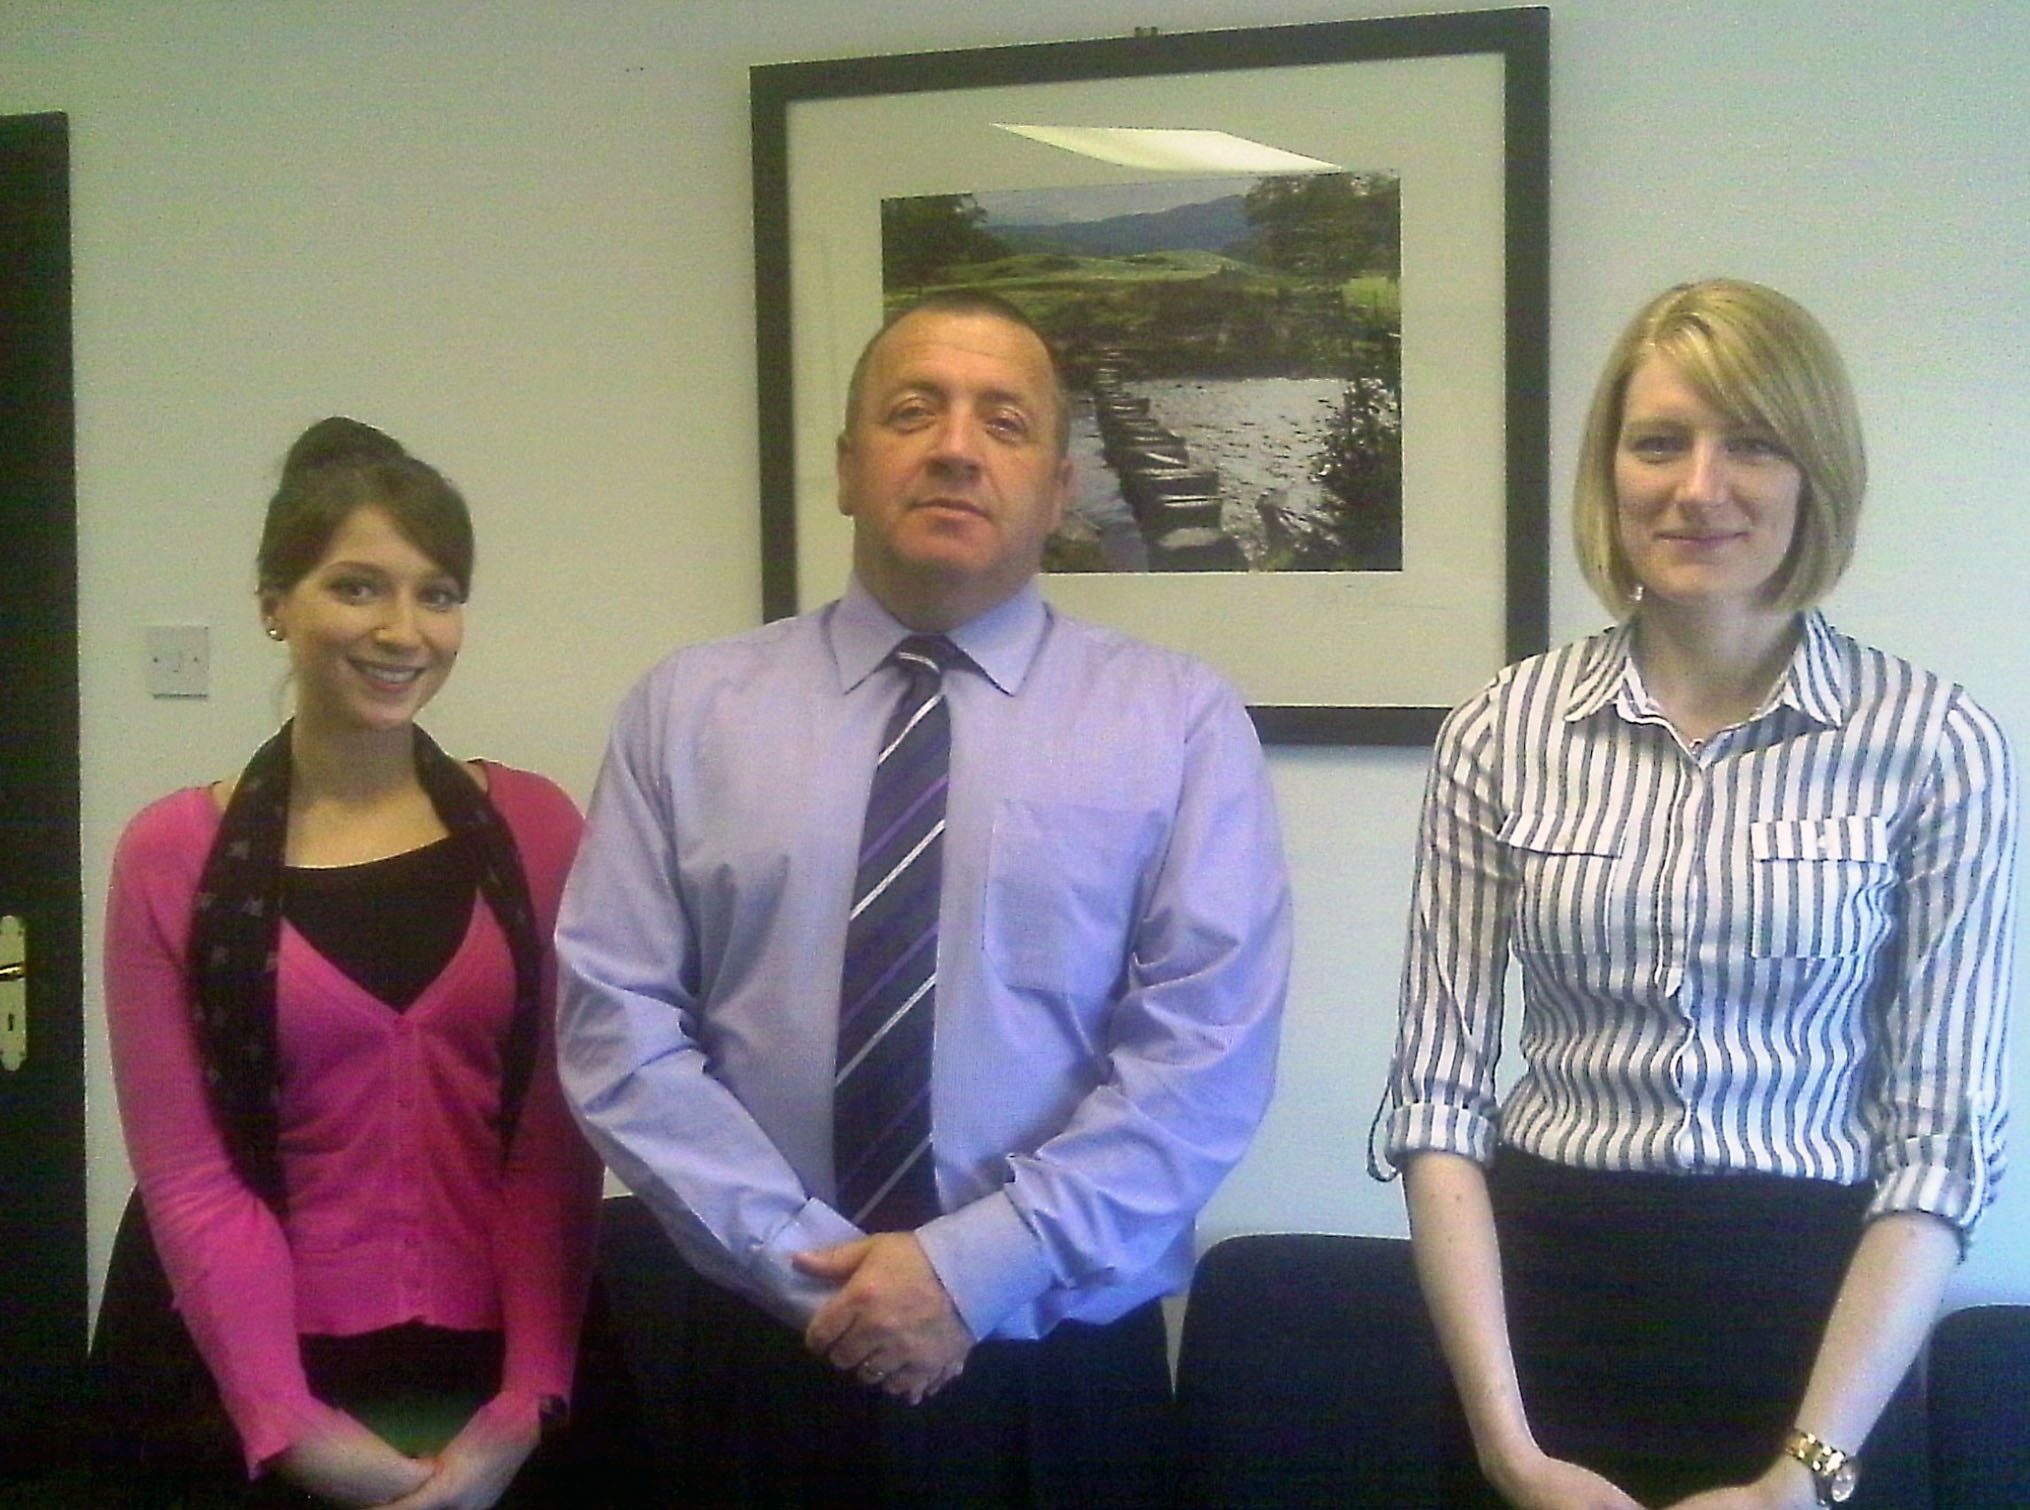 Beth Rogerson (left) and Joanna Scott (right) with Stuart Farrer, Partner at Saint & Co